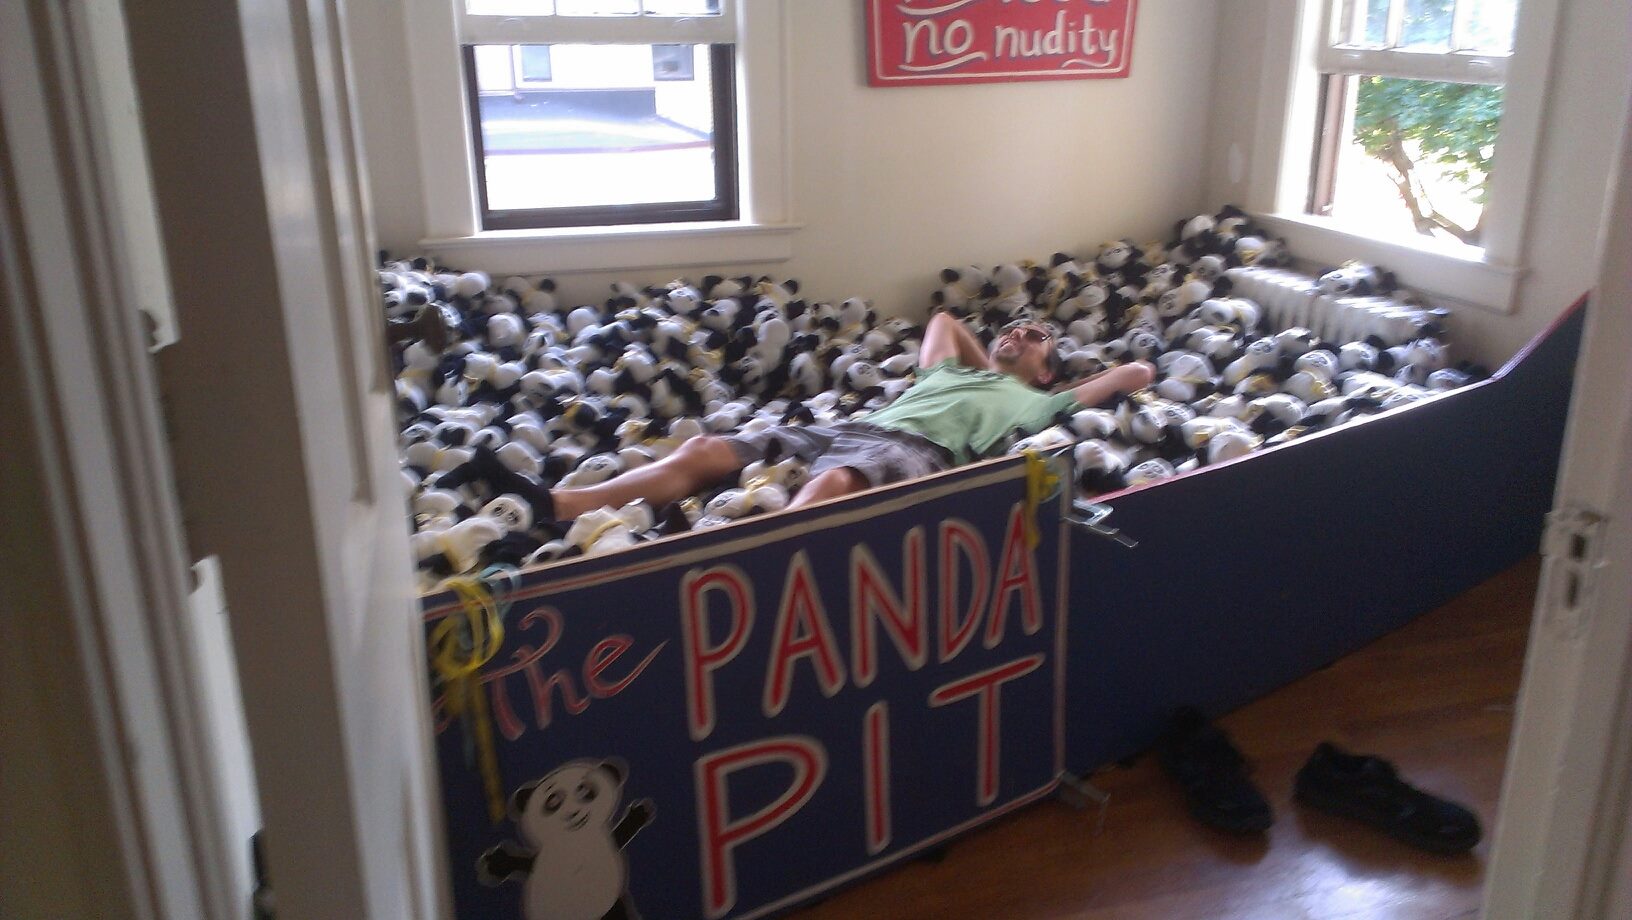 panda pit - no nudity the Panda